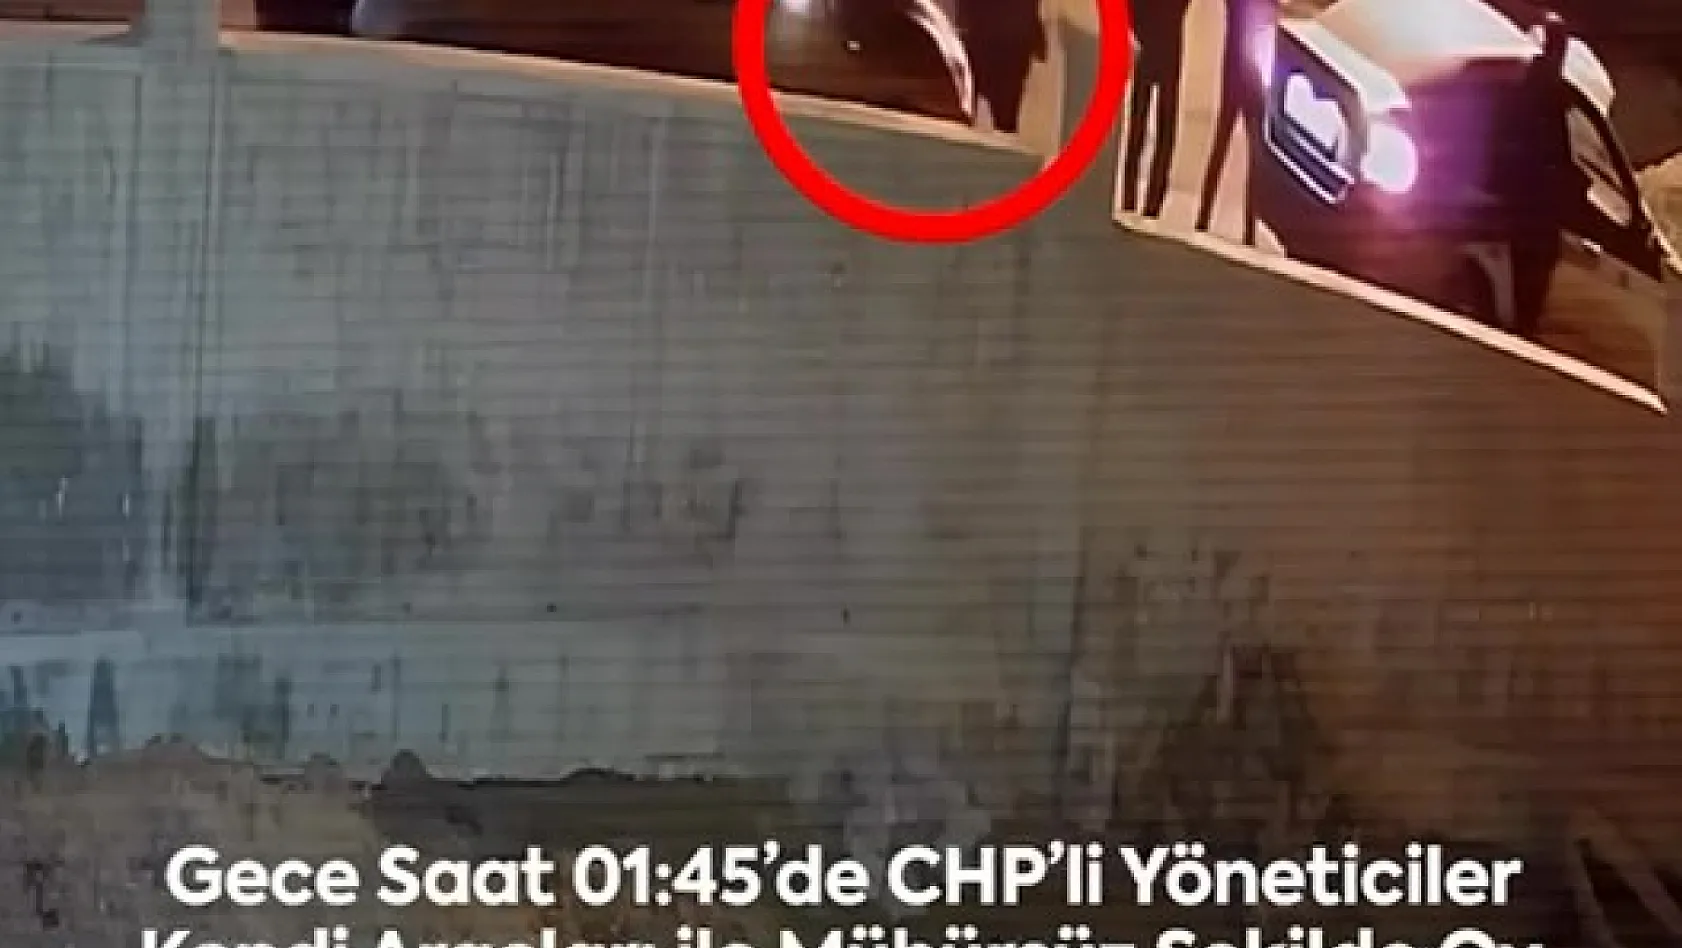 Ersoy bir kez daha CHP Milletvekilini şahit gösterip video paylaştı